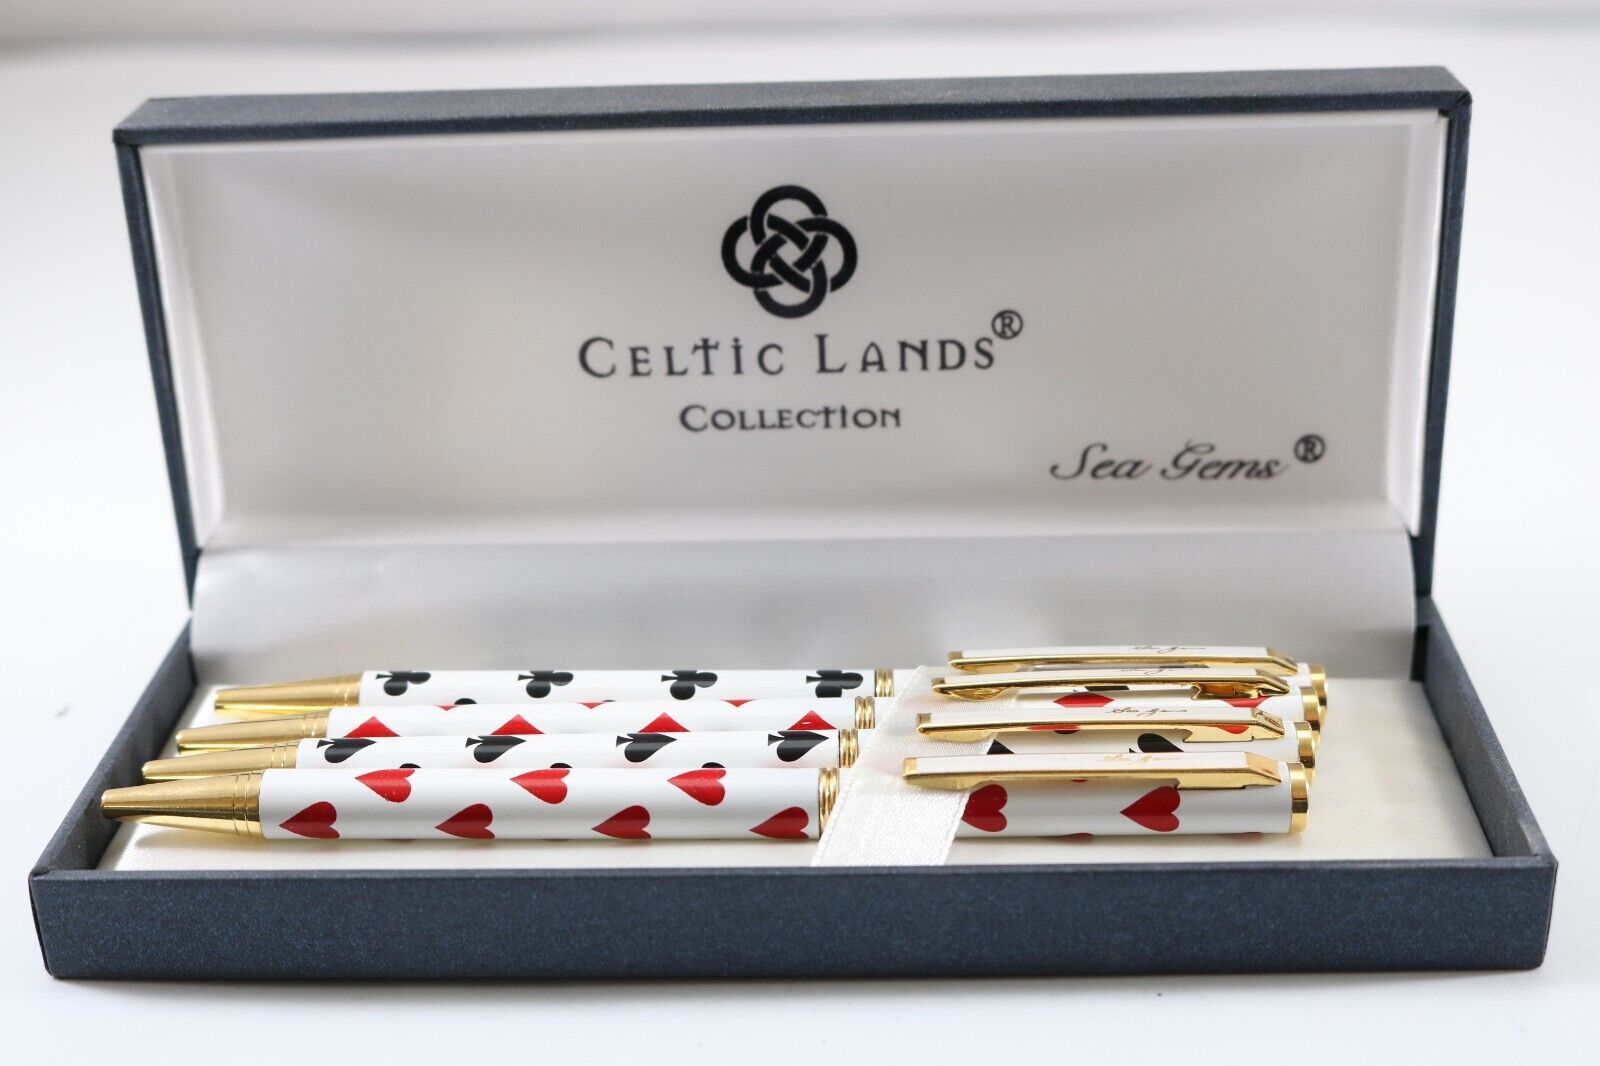 Vintage Celtic Lands Collection by Sea Gems Bridge Ballpoint Pens (Cased)